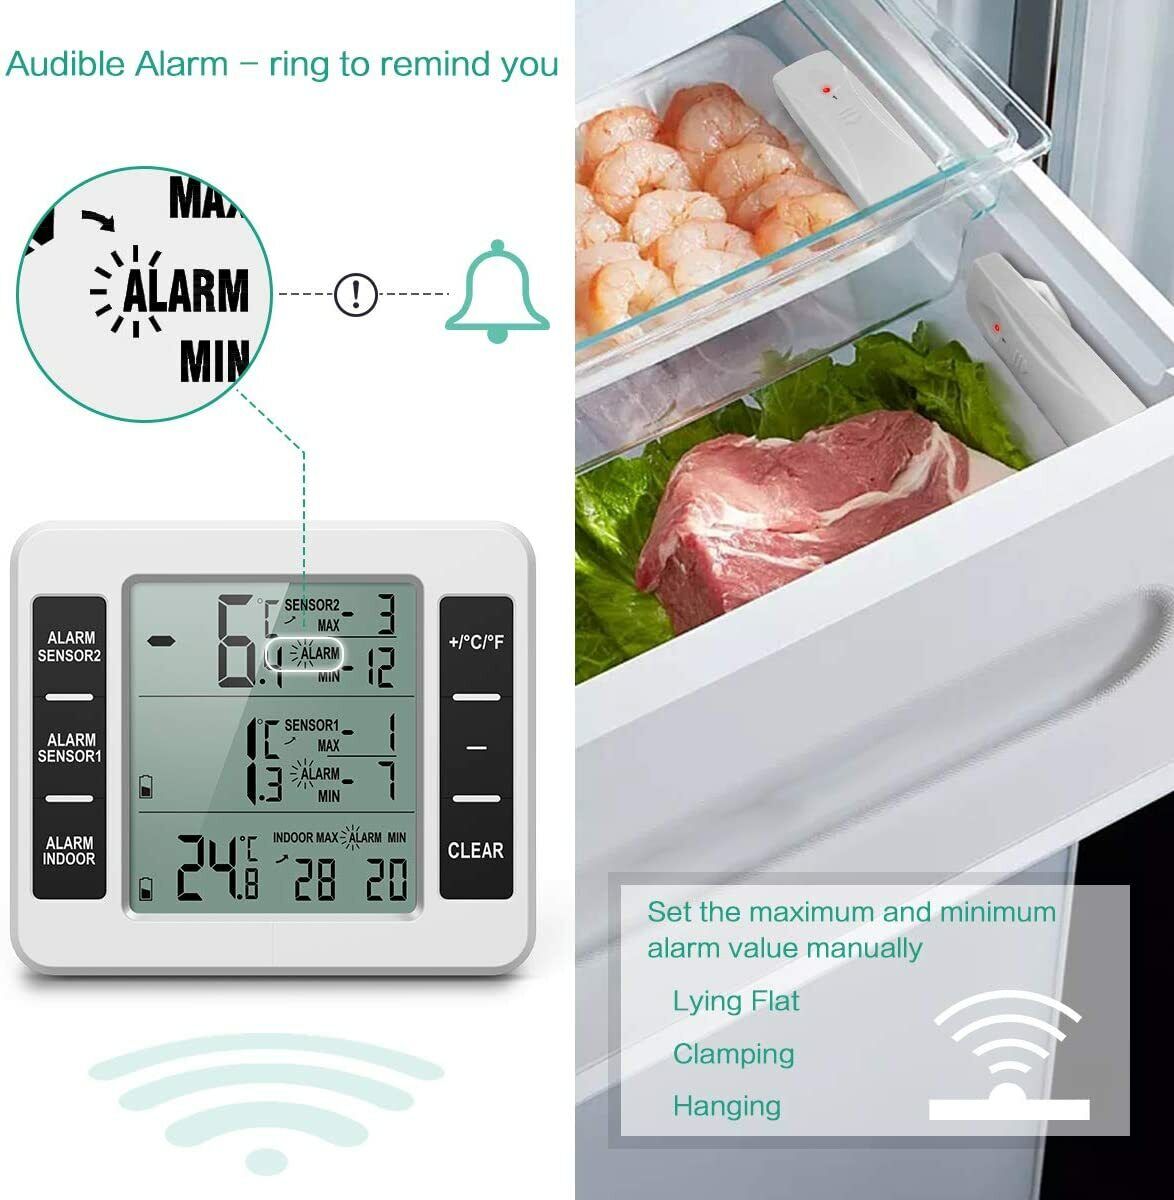 Funk Digital Kühlschrank Thermometer Gefrierschrank Temperatur 2 Sensor Alarm